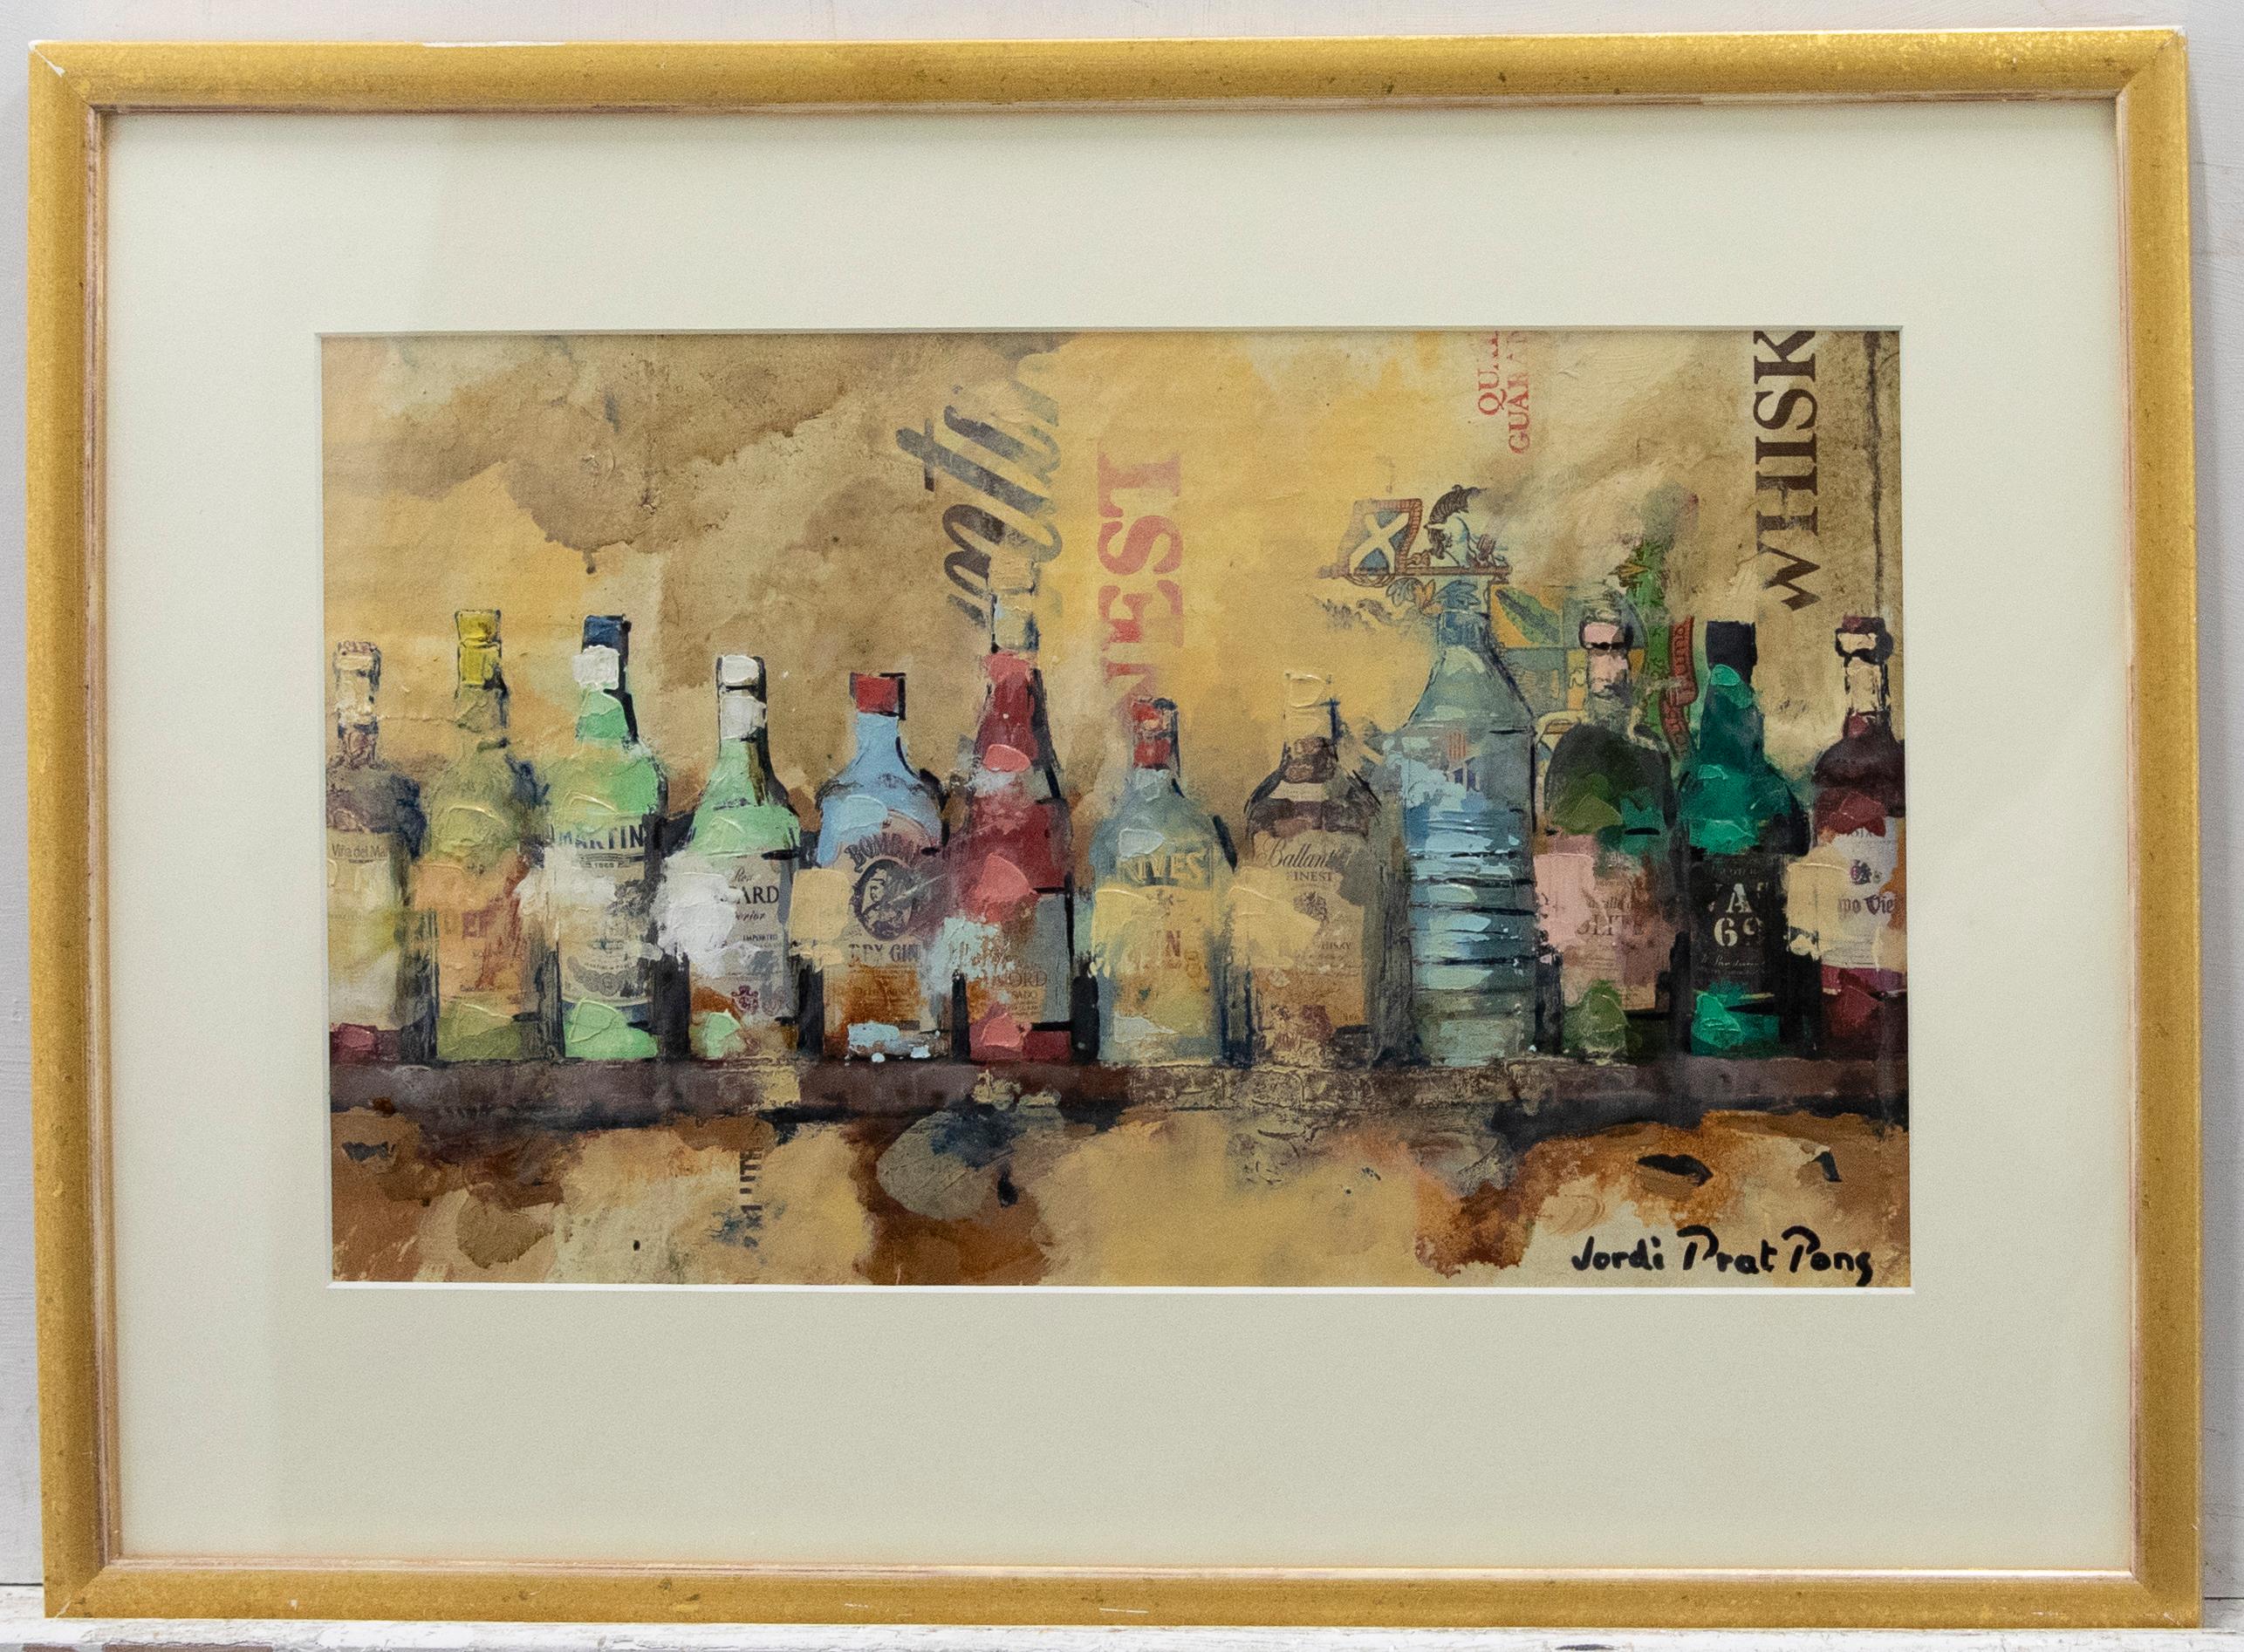 Jordi Prat Pons (b.1965) - Contemporary Mixed Media, Spirit Bottles on a Shelf - Mixed Media Art by Jordi PRAT